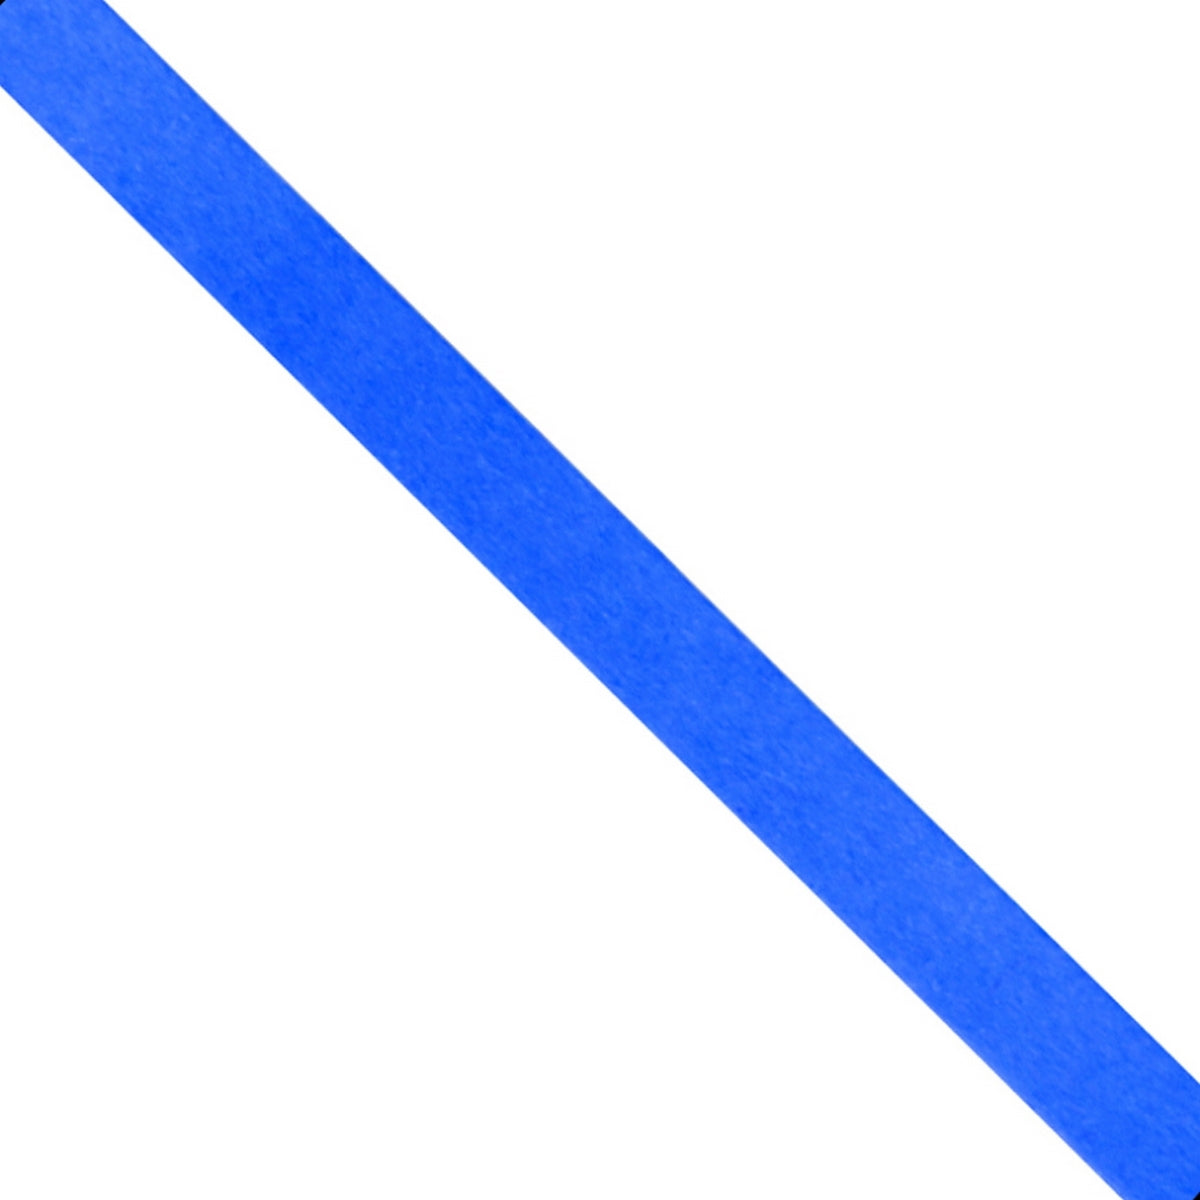 jags-mumbai Qilling Paper Quilling Strip(Blue,3mm)